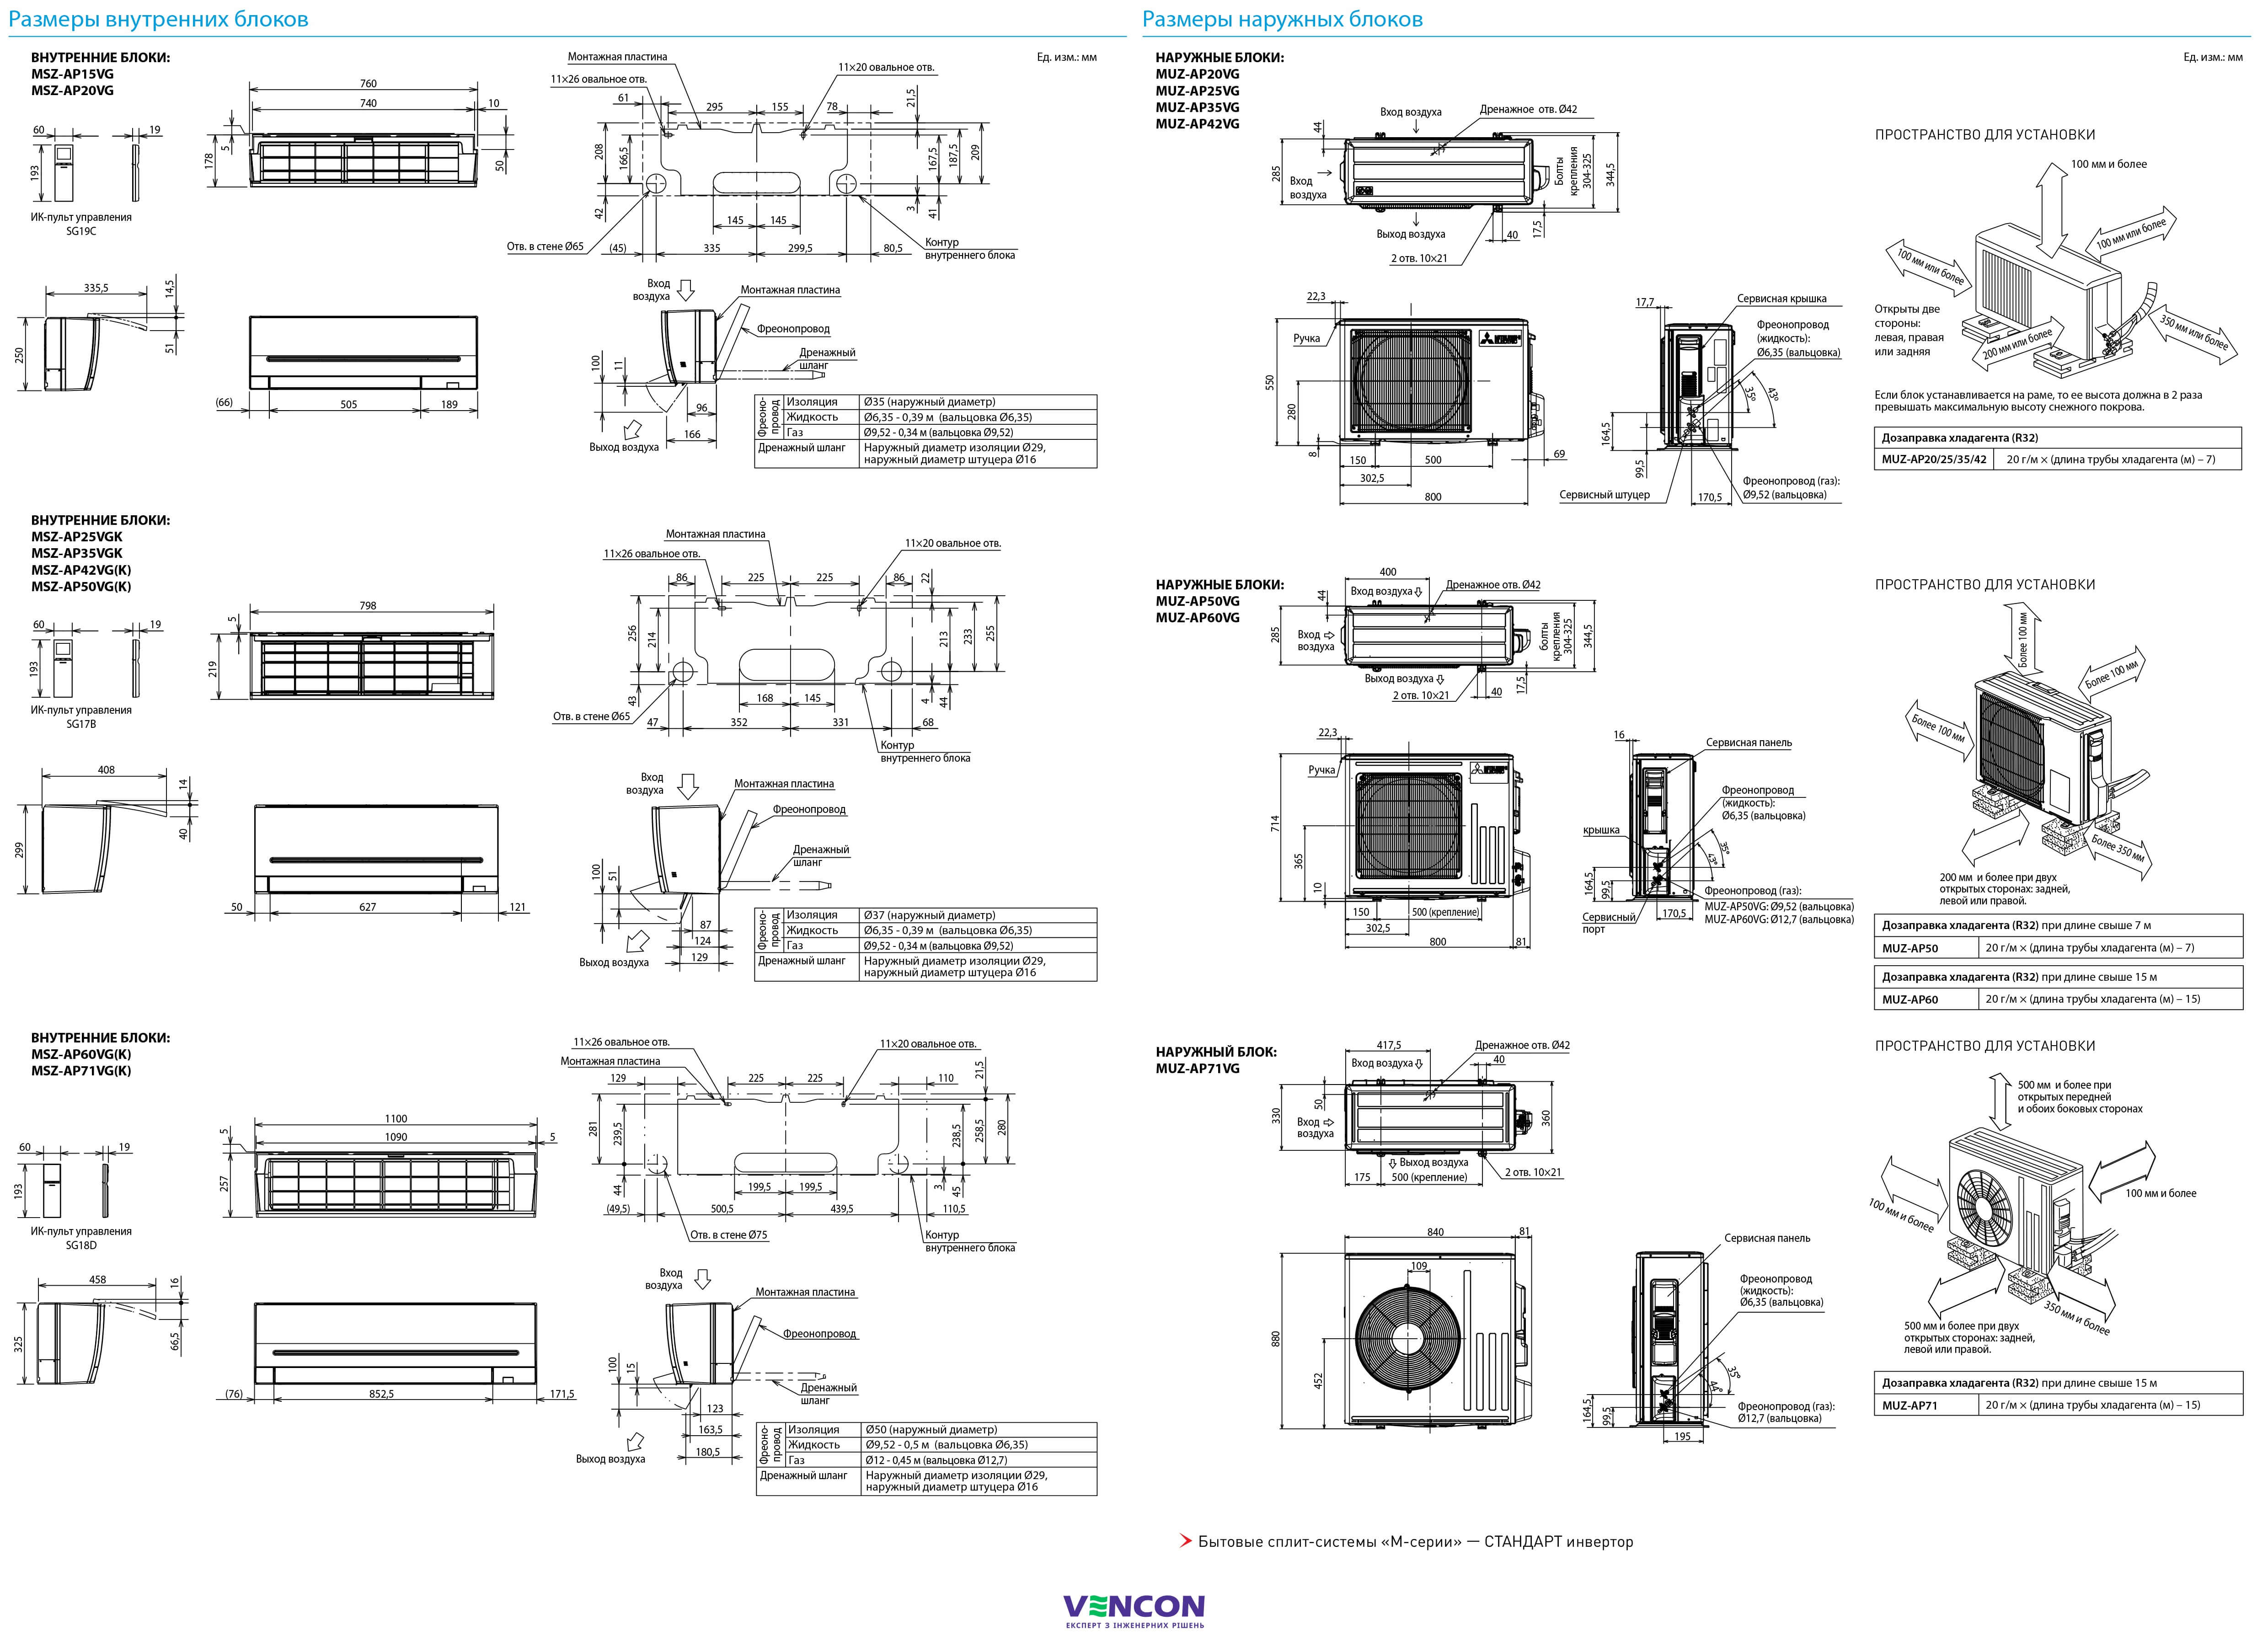 Mitsubishi Electric Standard Inverter MSZ-AP60VG/MUZ-AP60VG Габаритные размеры